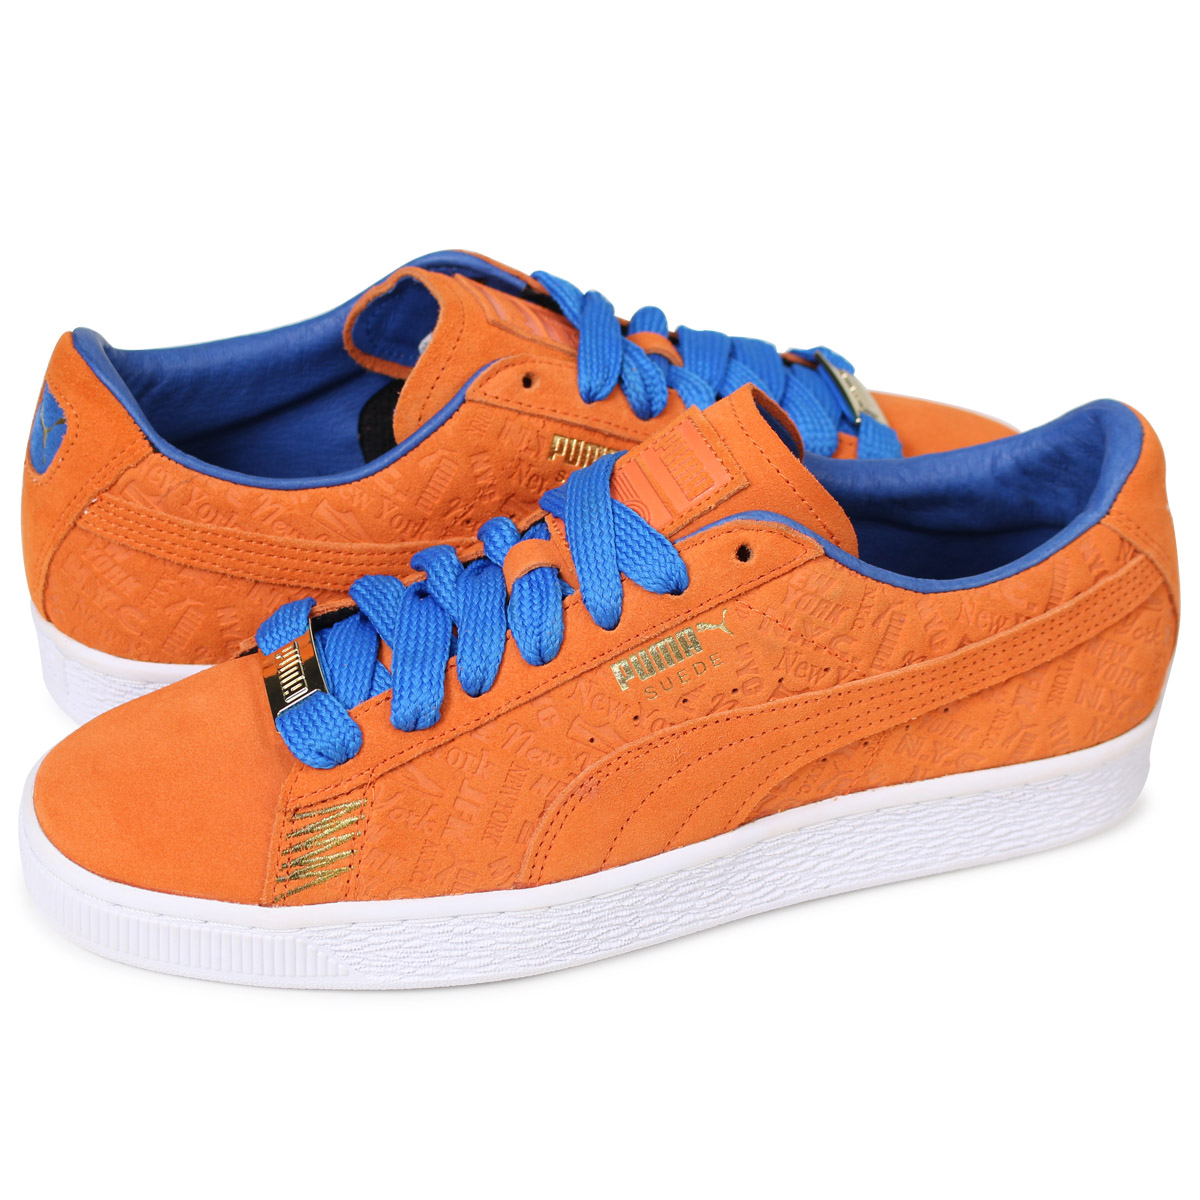 puma shoes for men orange